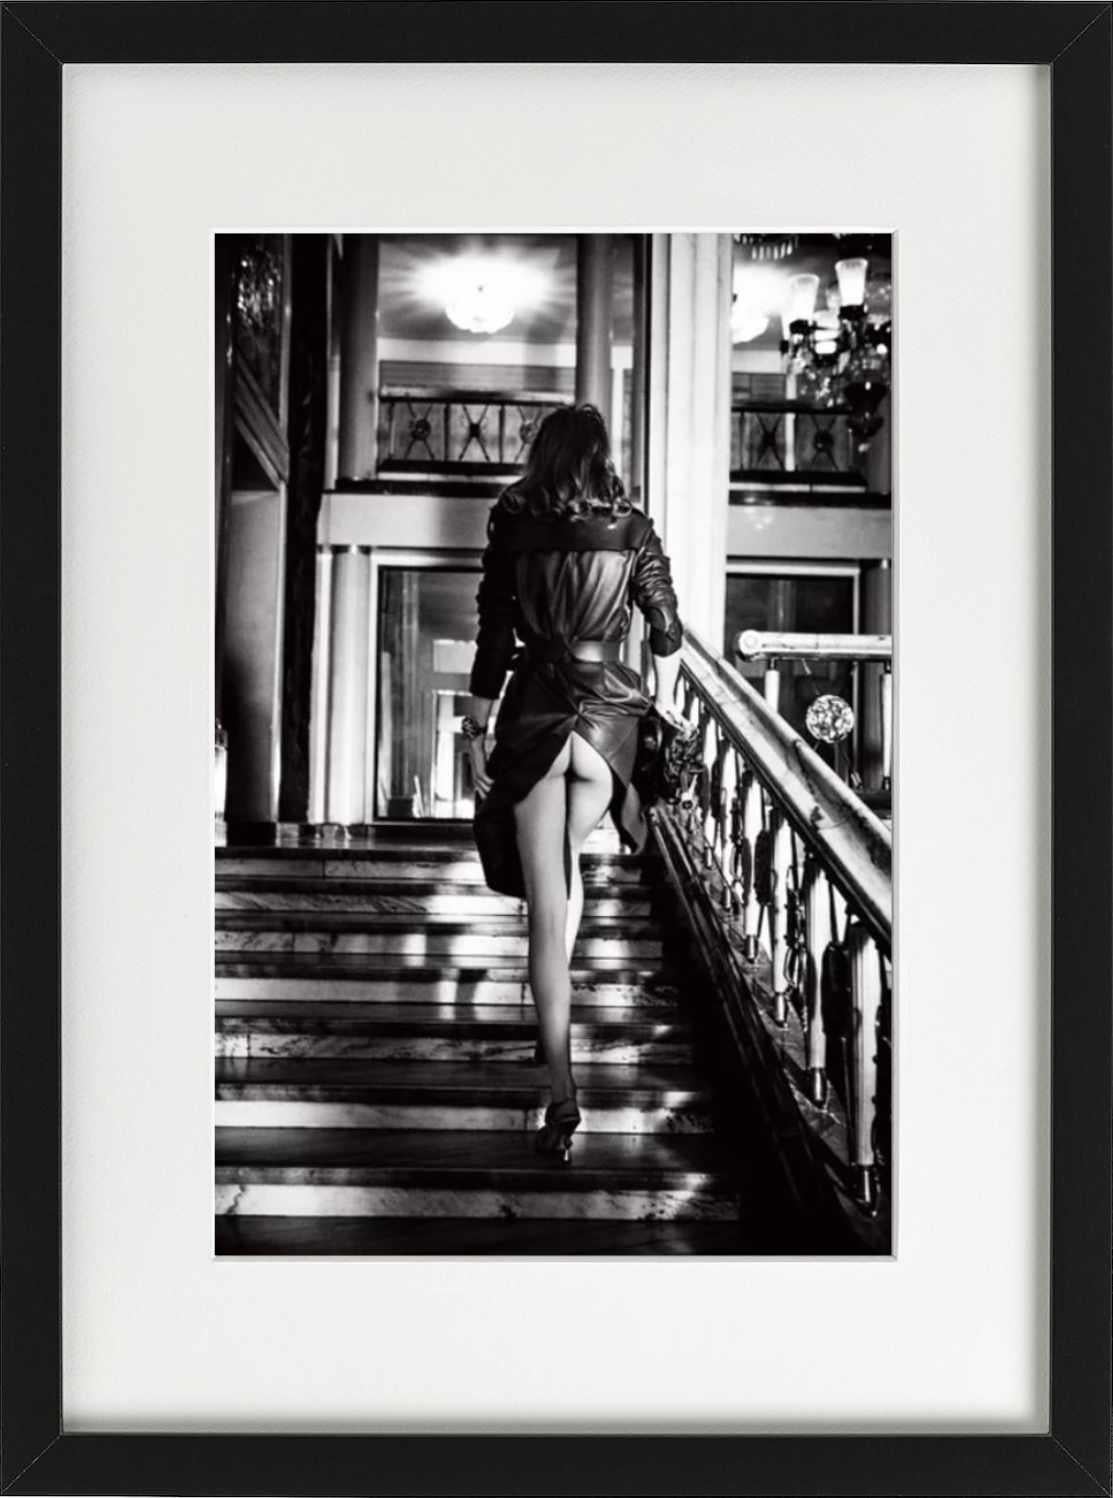 Undercover, Warsaw - semi nude on a stairwell, fine art photography, 2019 - Contemporary Photograph by Ellen von Unwerth